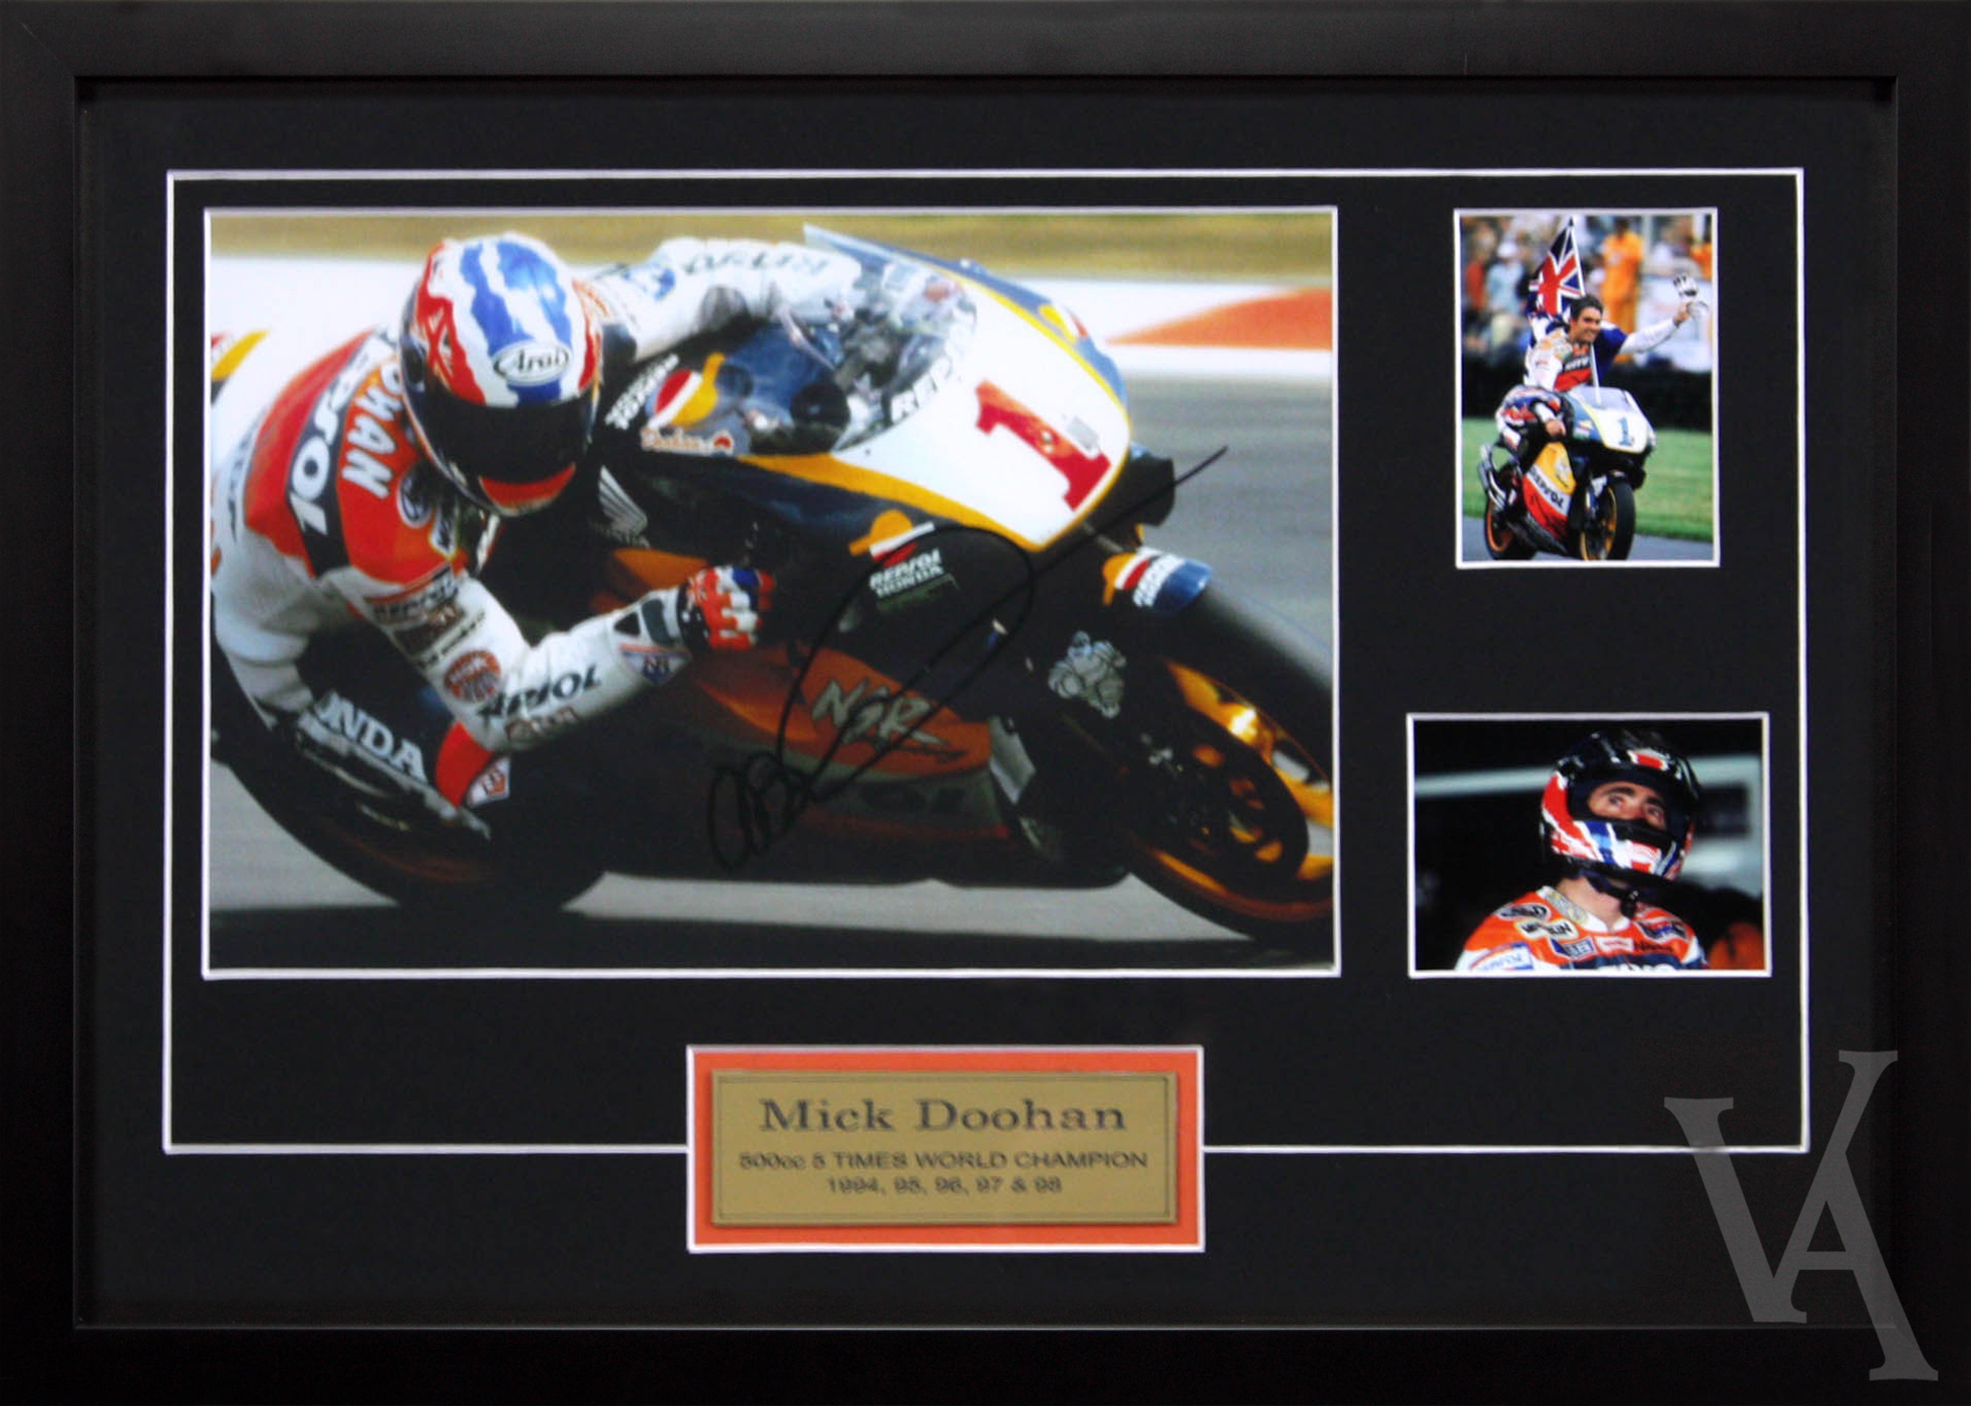 Mick Doohan Signed & Framed 500cc GP World Memorabilia. Team Honda 5 x Times 500cc World Champion.